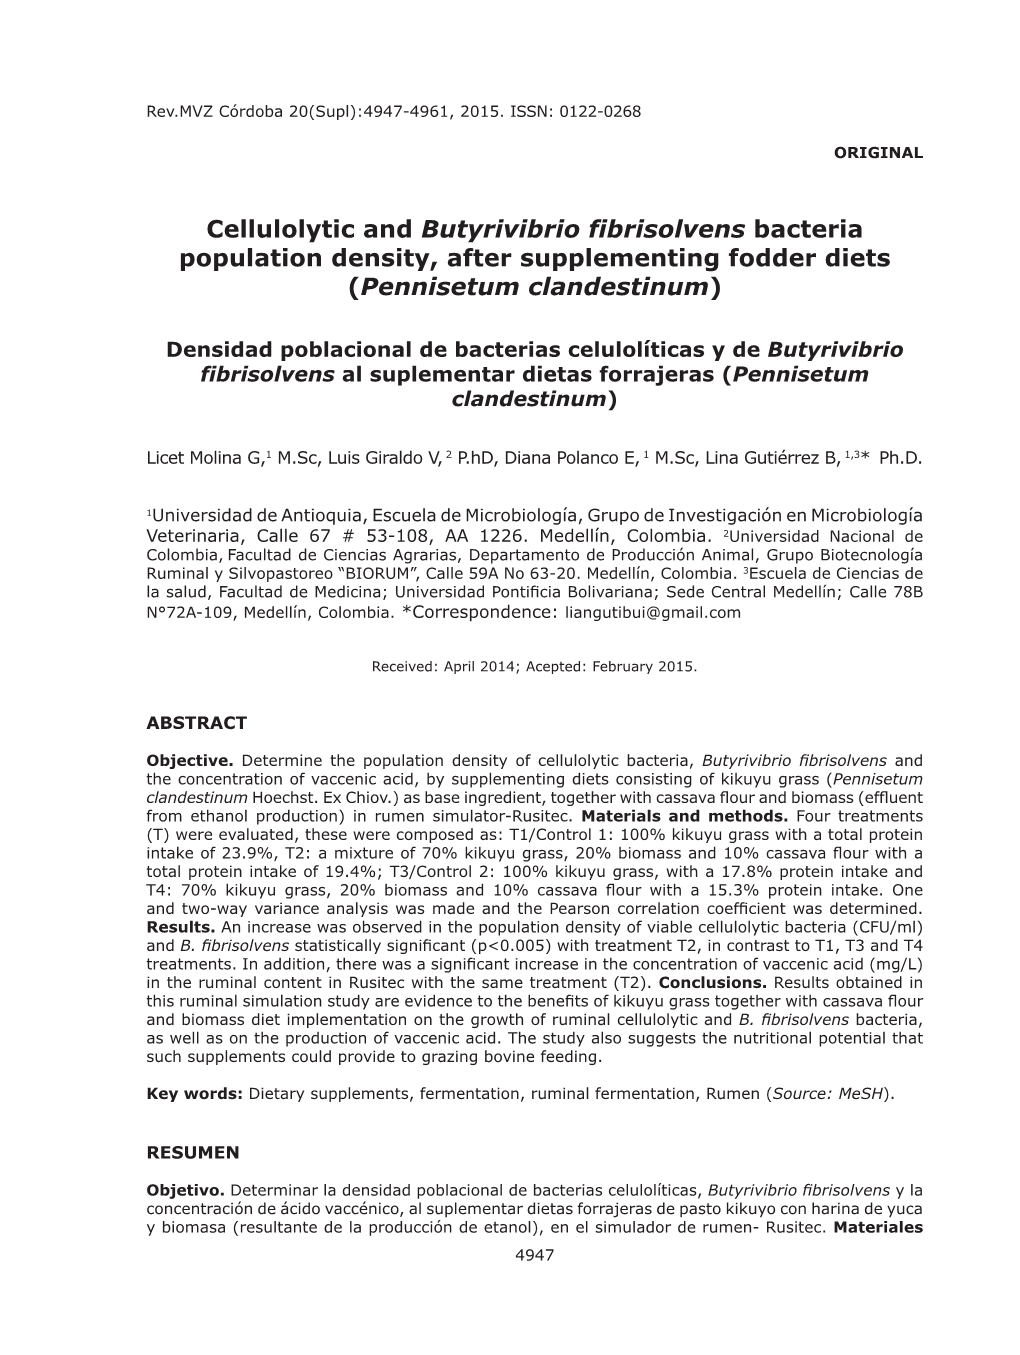 Cellulolytic and Butyrivibrio Fibrisolvens Bacteria Population Density, After Supplementing Fodder Diets (Pennisetum Clandestinum)